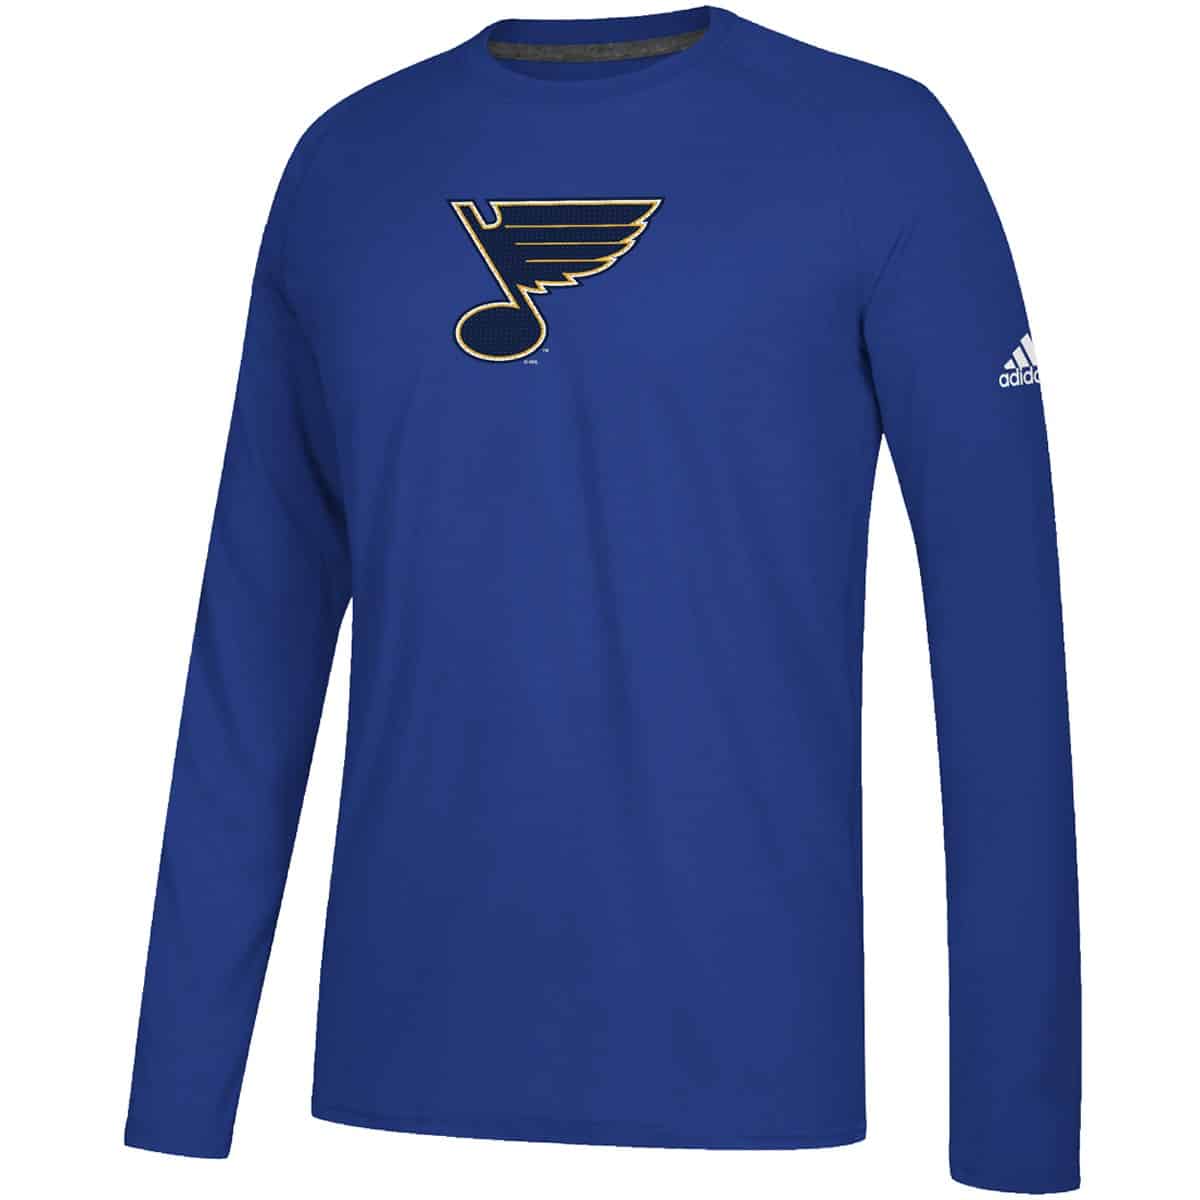 Adidas Men's St. Louis Blues Ultimate Long Sleeve T-Shirt